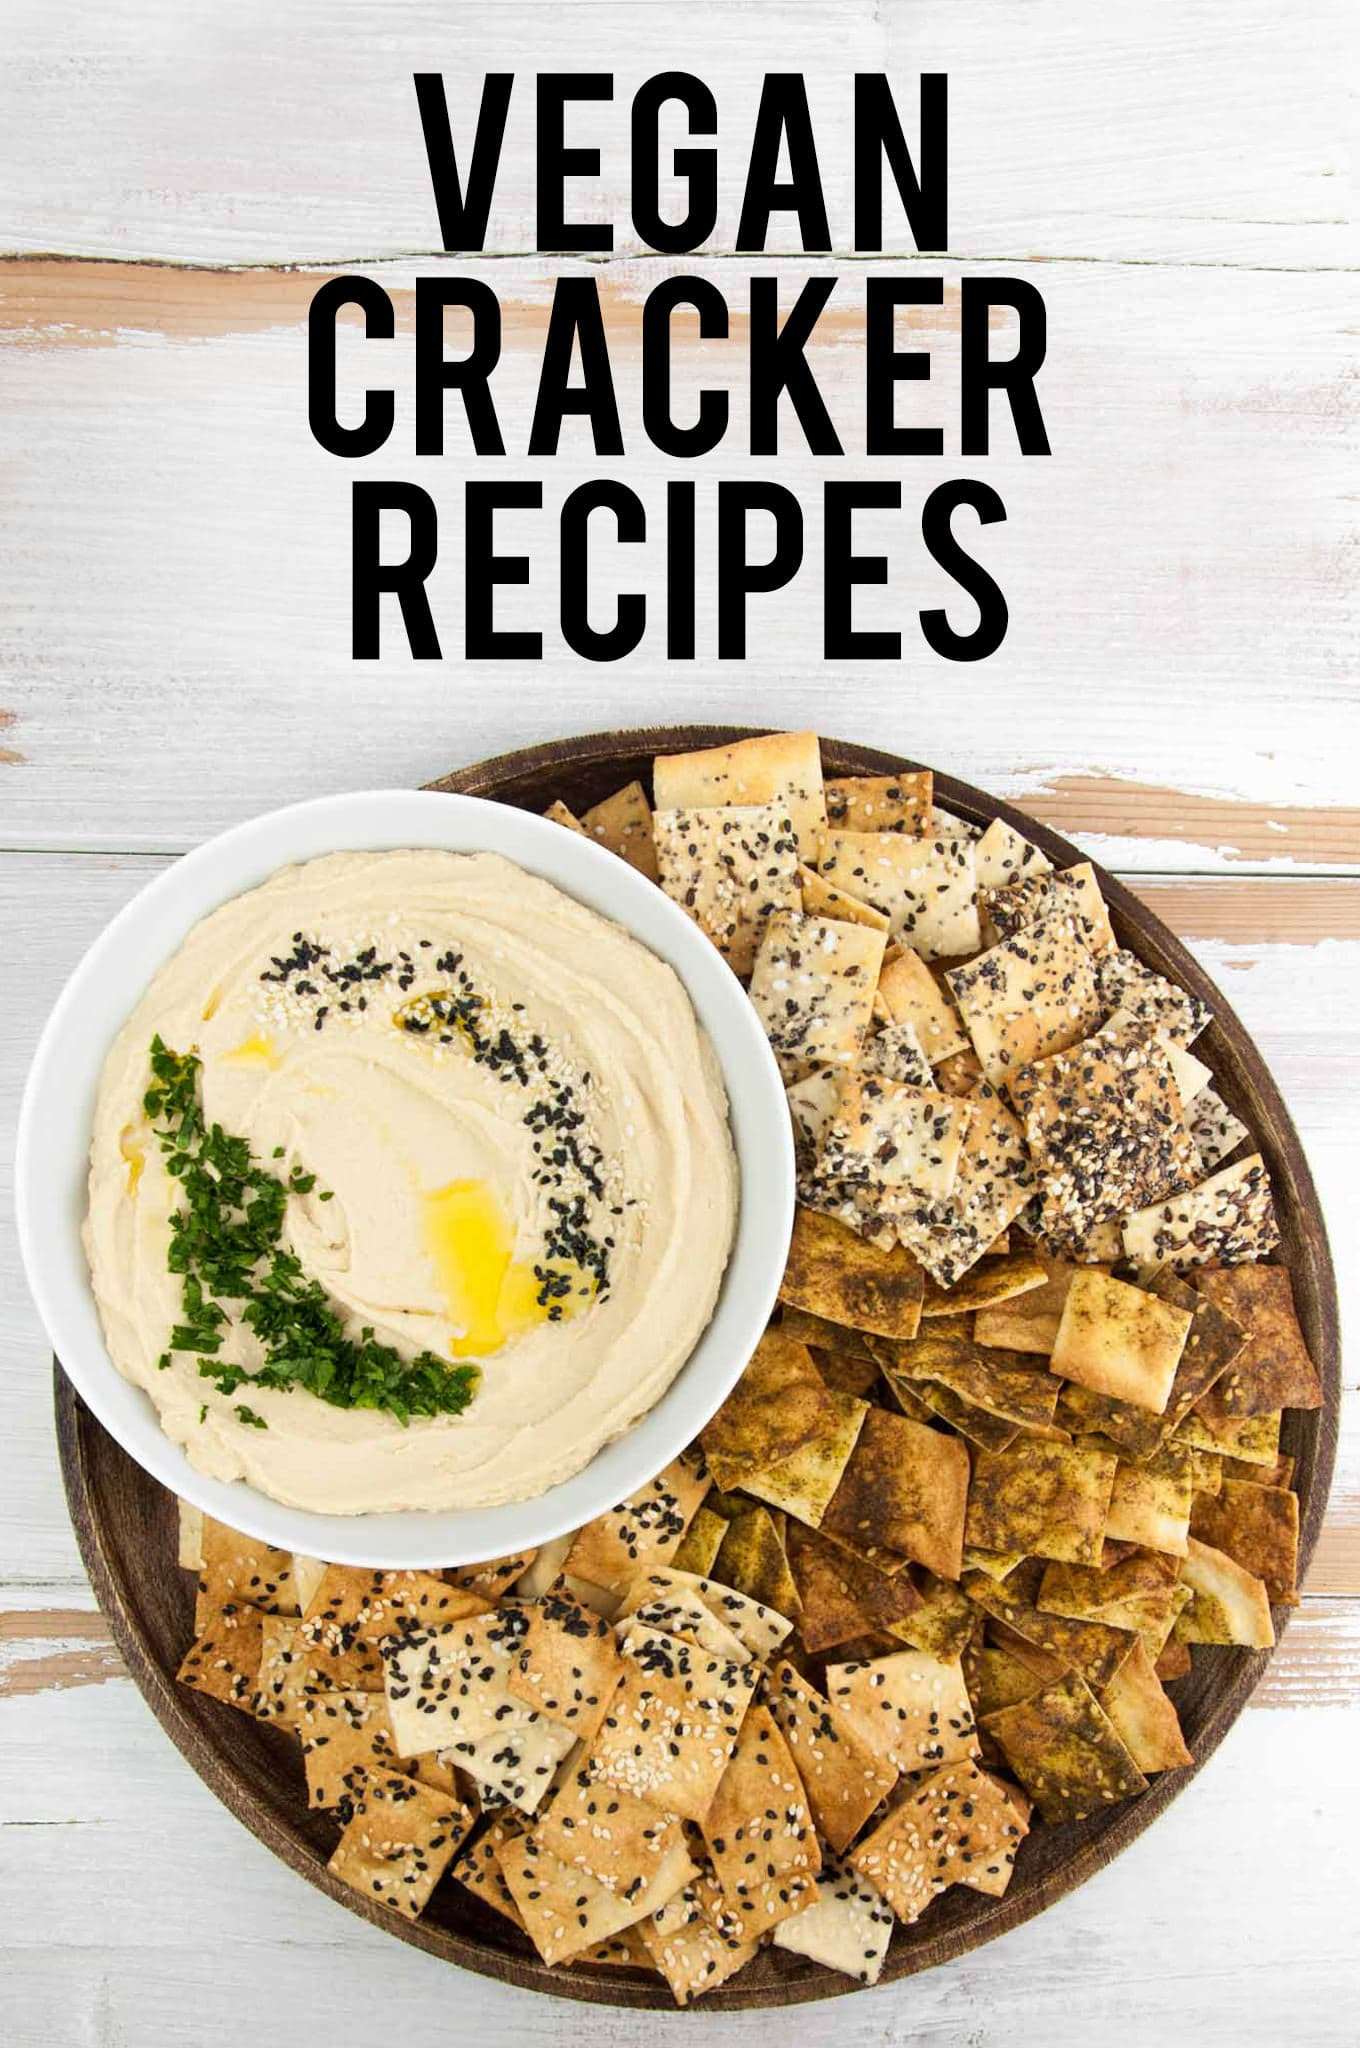 Pinterest Vegan Recipes
 10 Easy Vegan Cracker Recipes